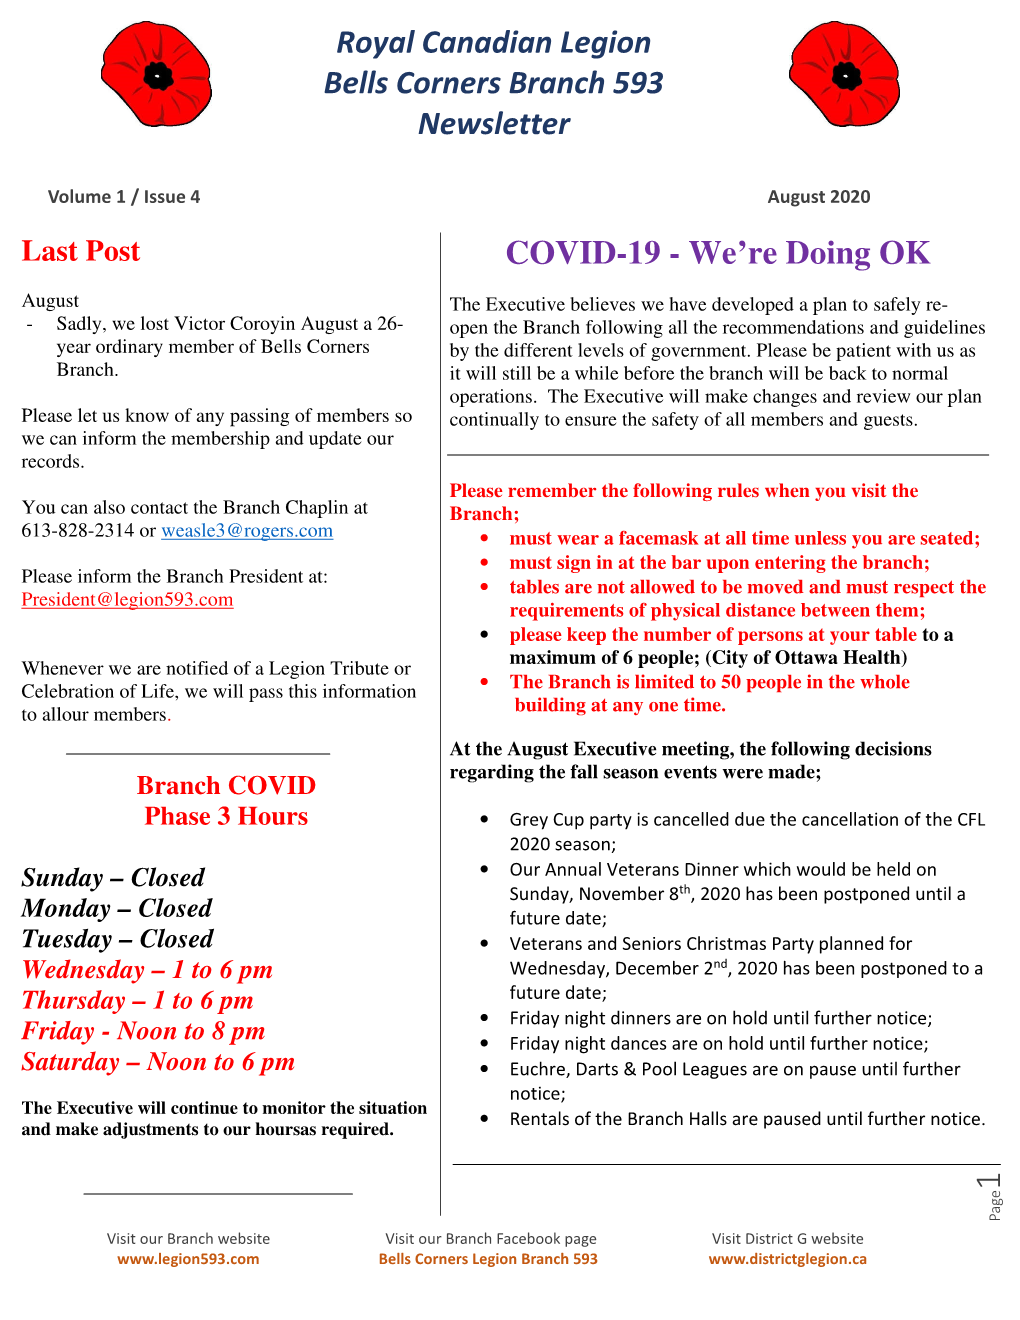 Royal Canadian Legion Bells Corners Branch 593 Newsletter COVID-19